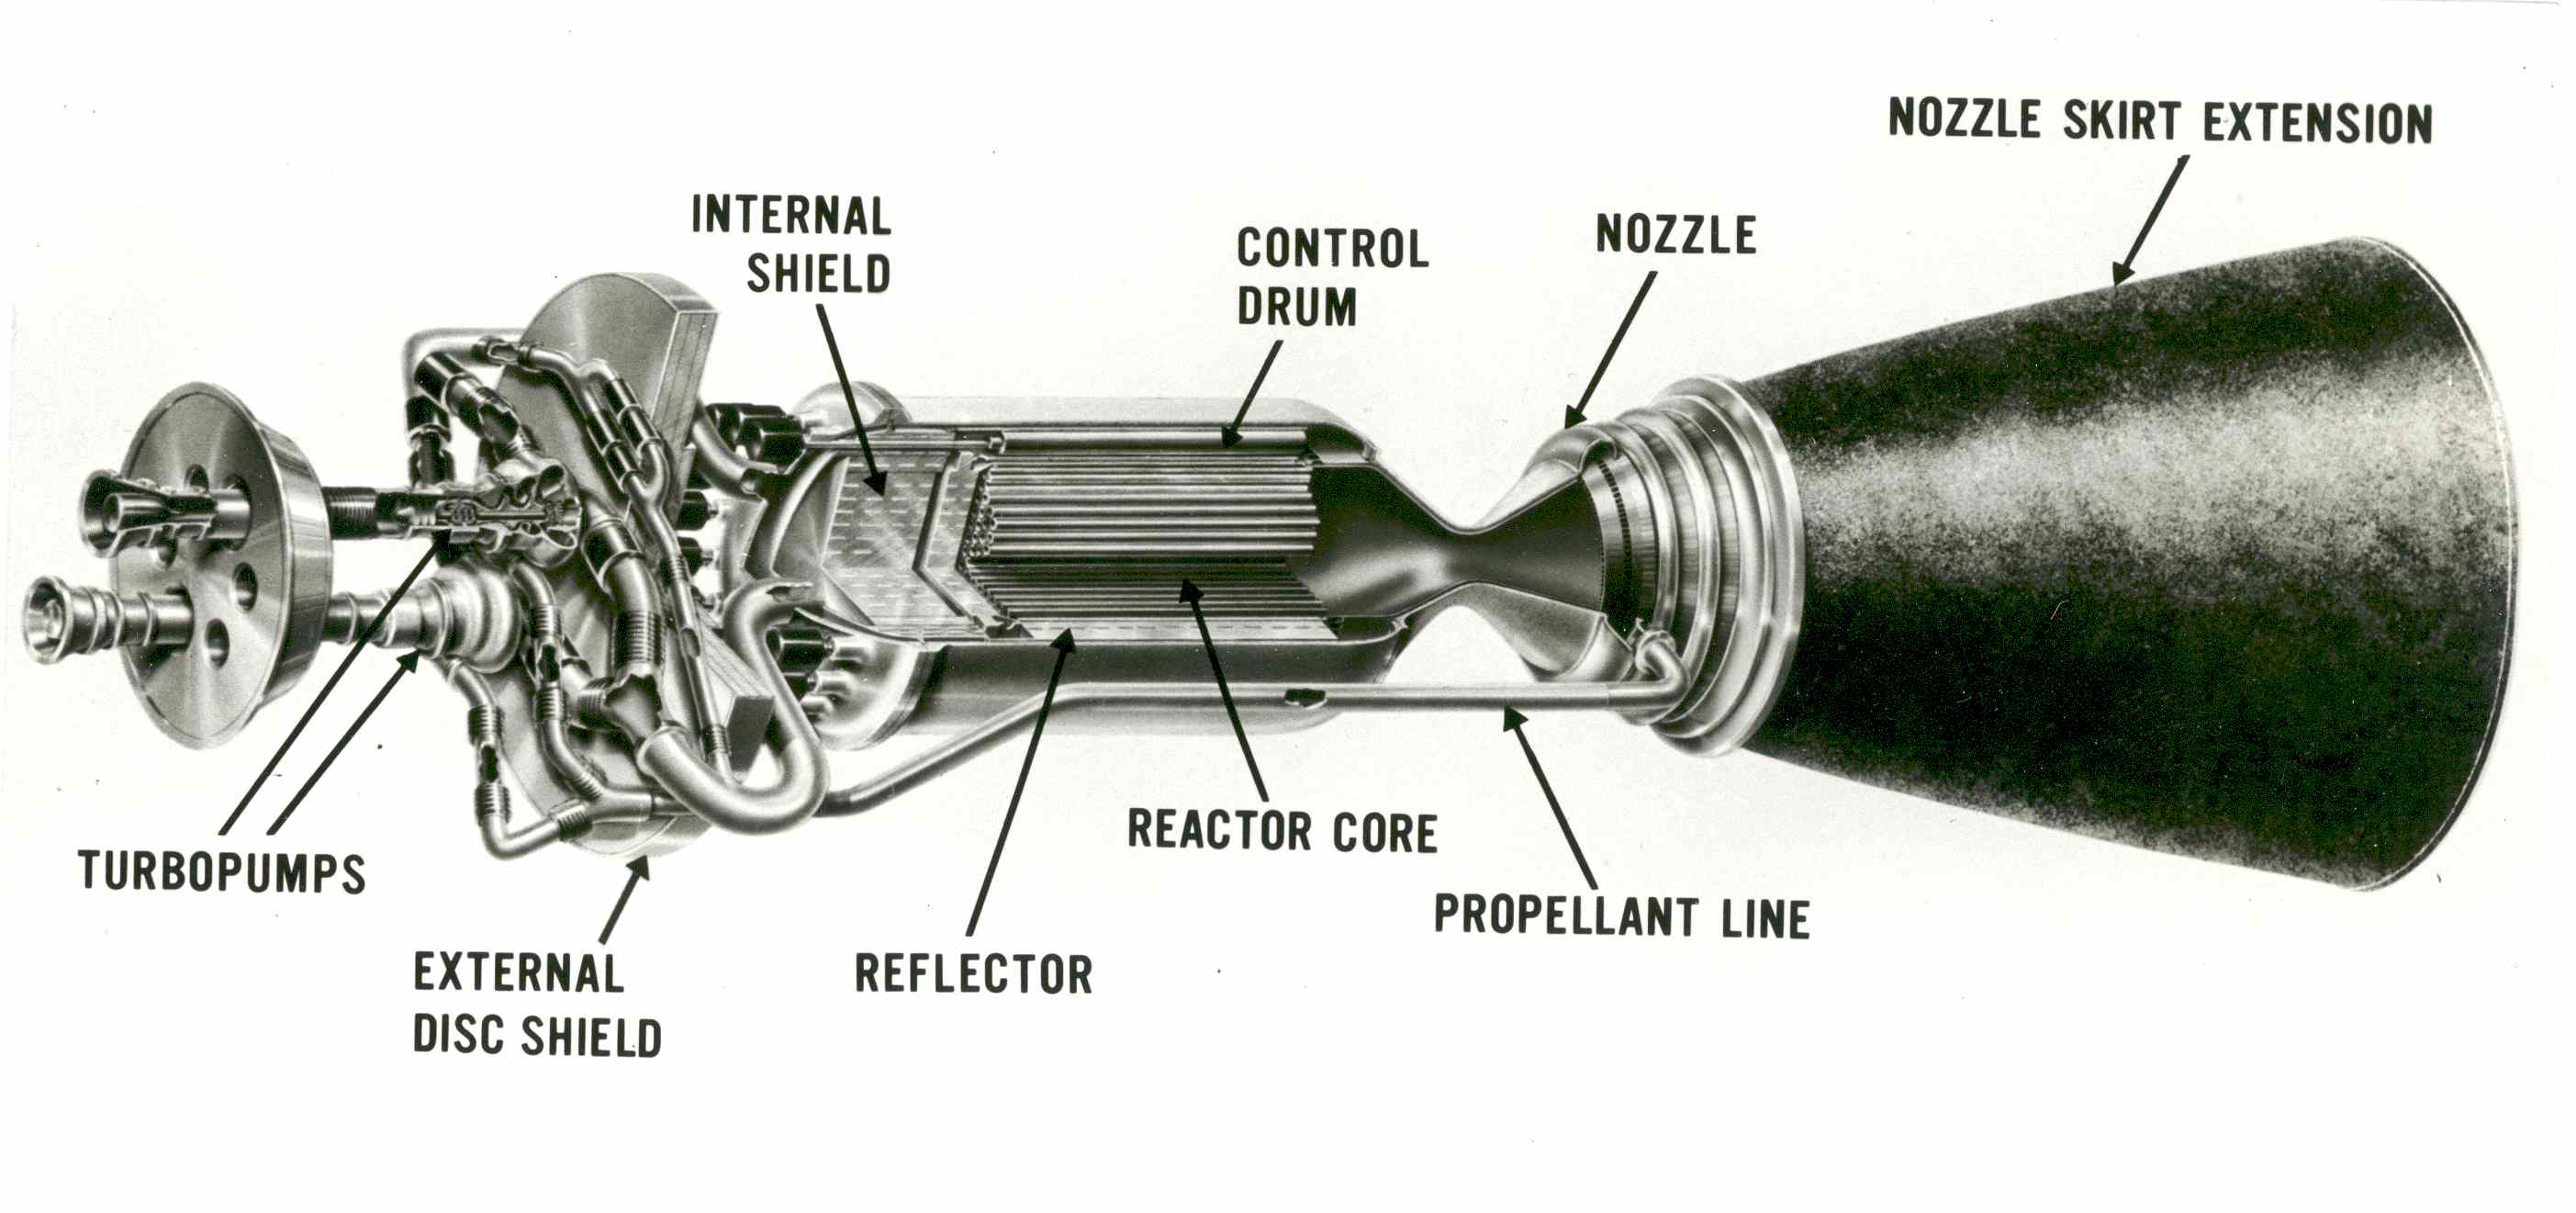 Images Wikimedia Commons/16 NASA Nerva_-_nuclear_rocket_engine.jpg